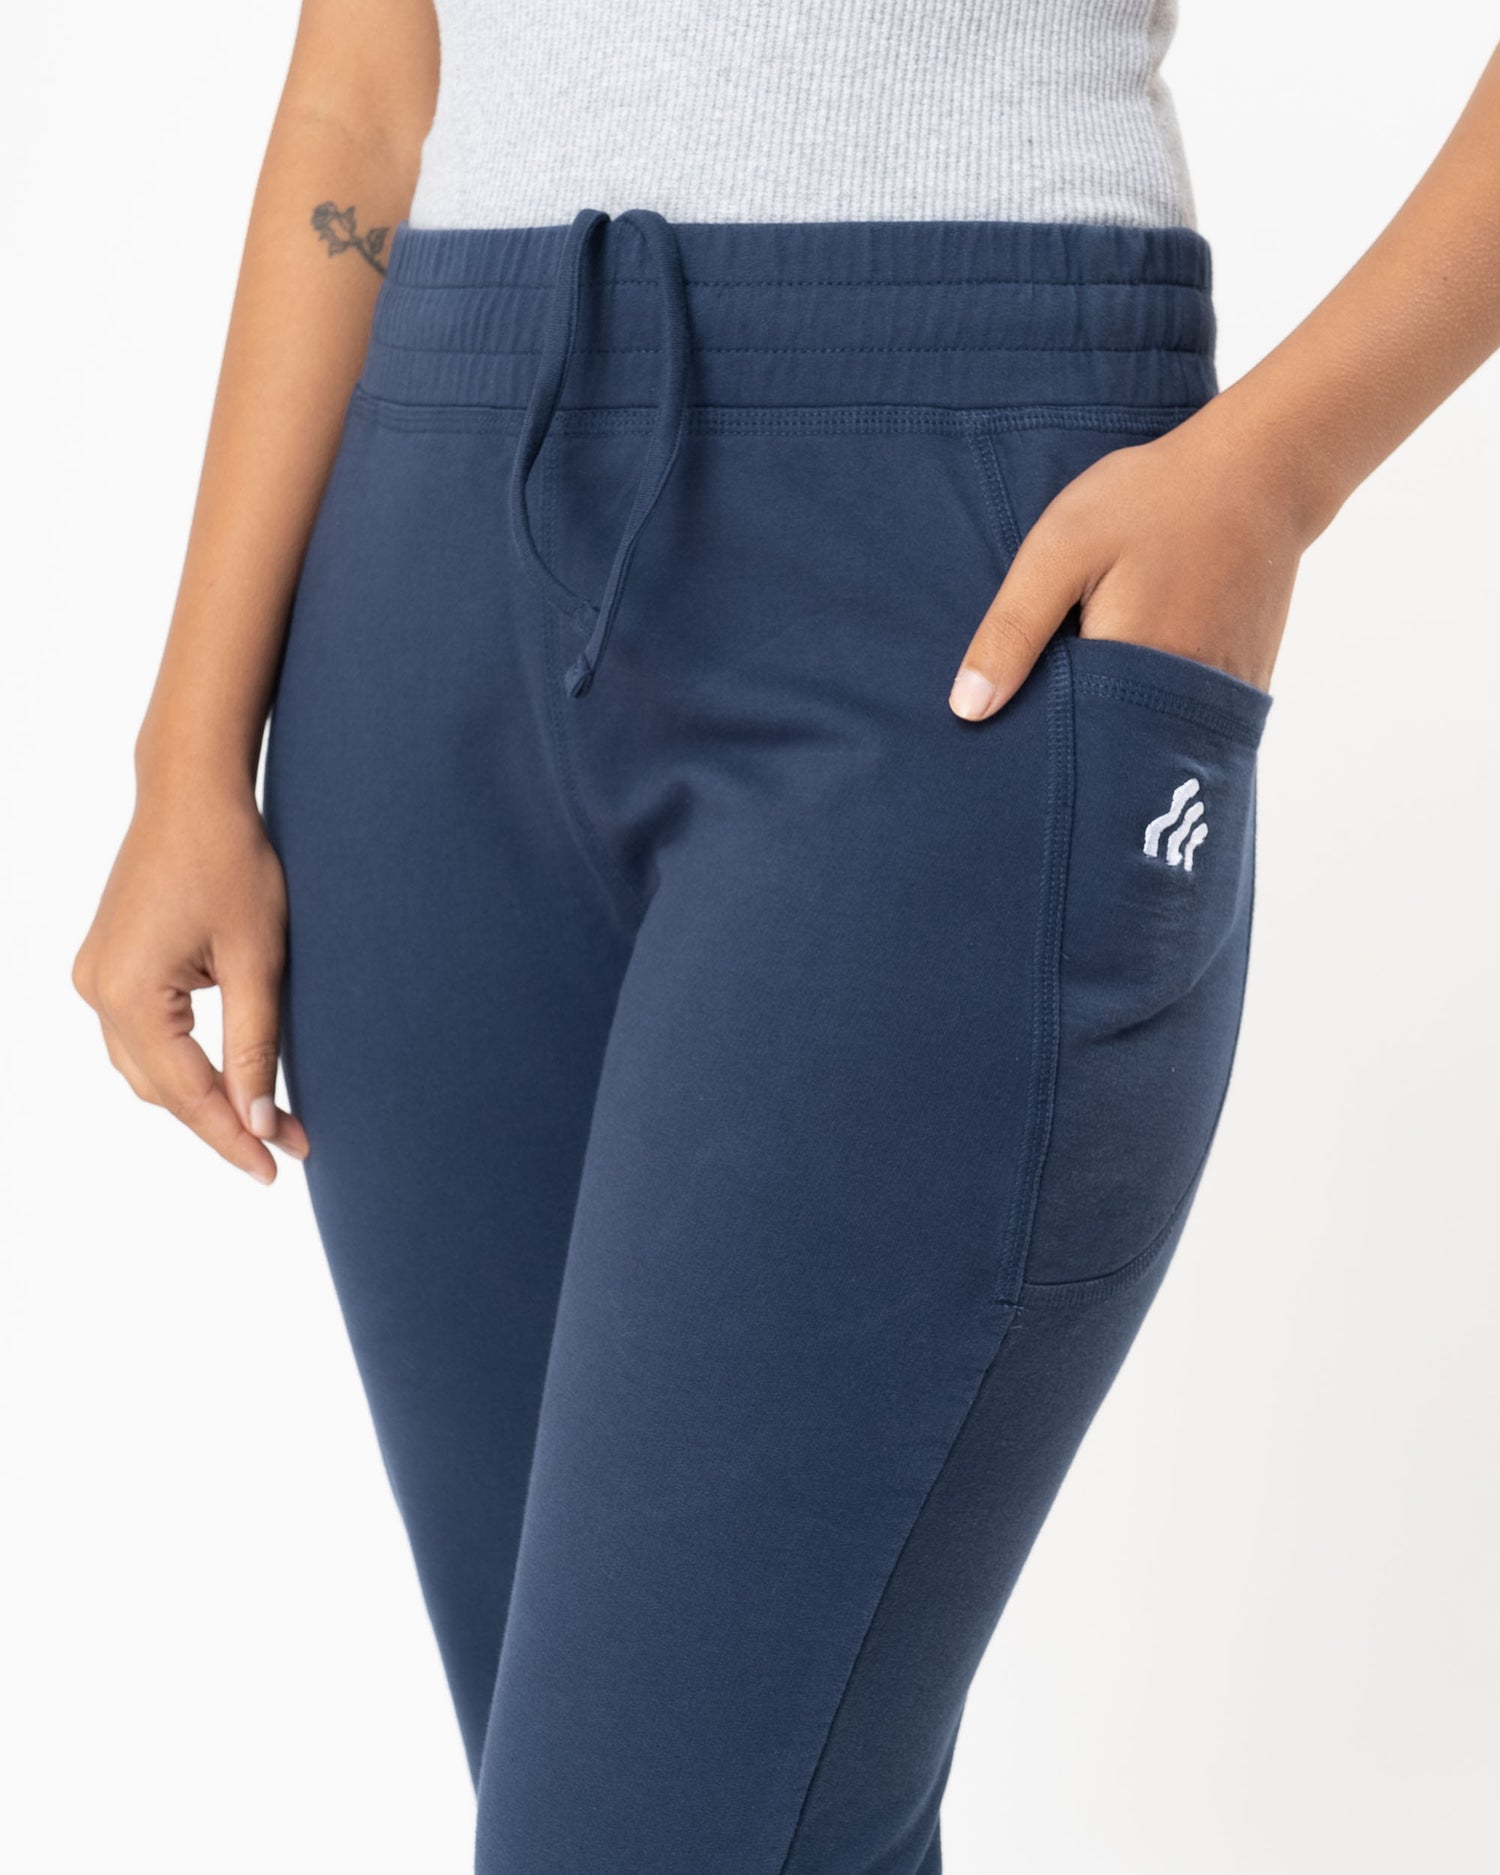 Khaki Capris Pants|women's Khaki Wide Leg Capris - High Waist Cotton Linen Summer  Pants